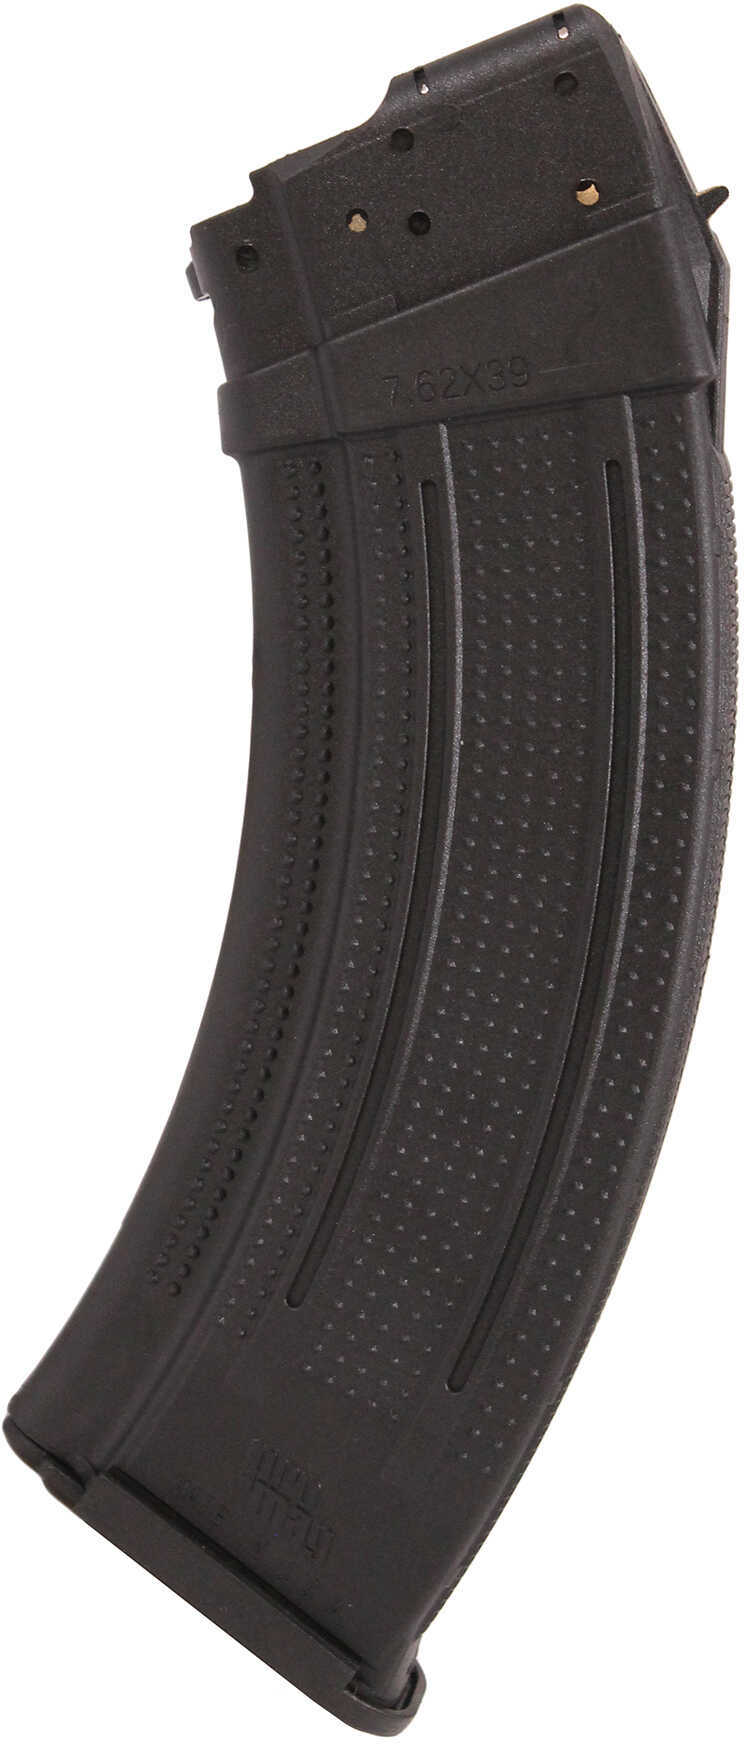 ProMag AK-47 Magazine 30 Round Steel Lined Polymer Black